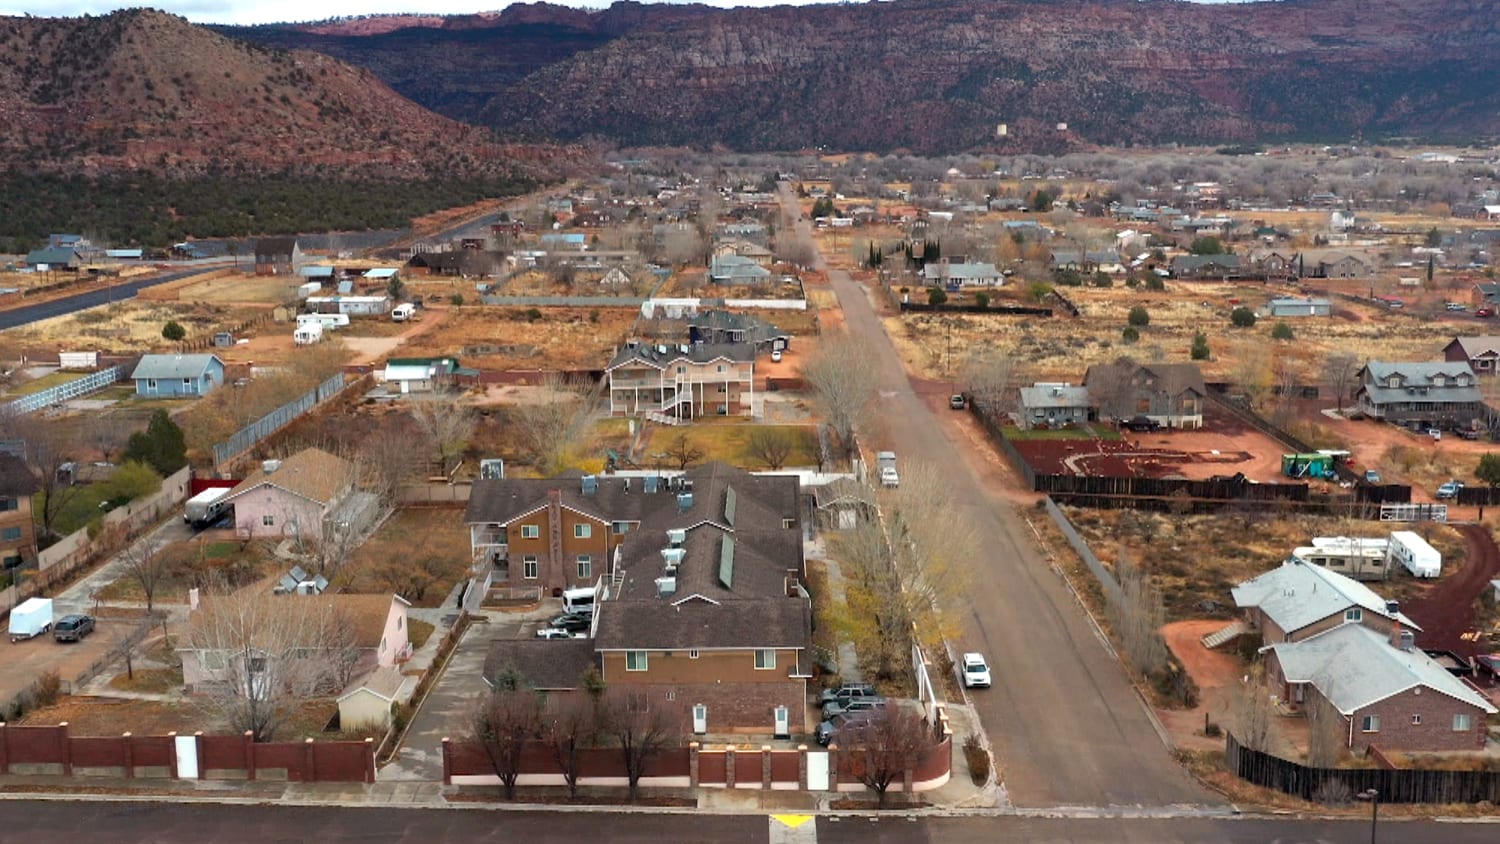 In a fundamentalist Mormon town, modernization highlights a stark divide